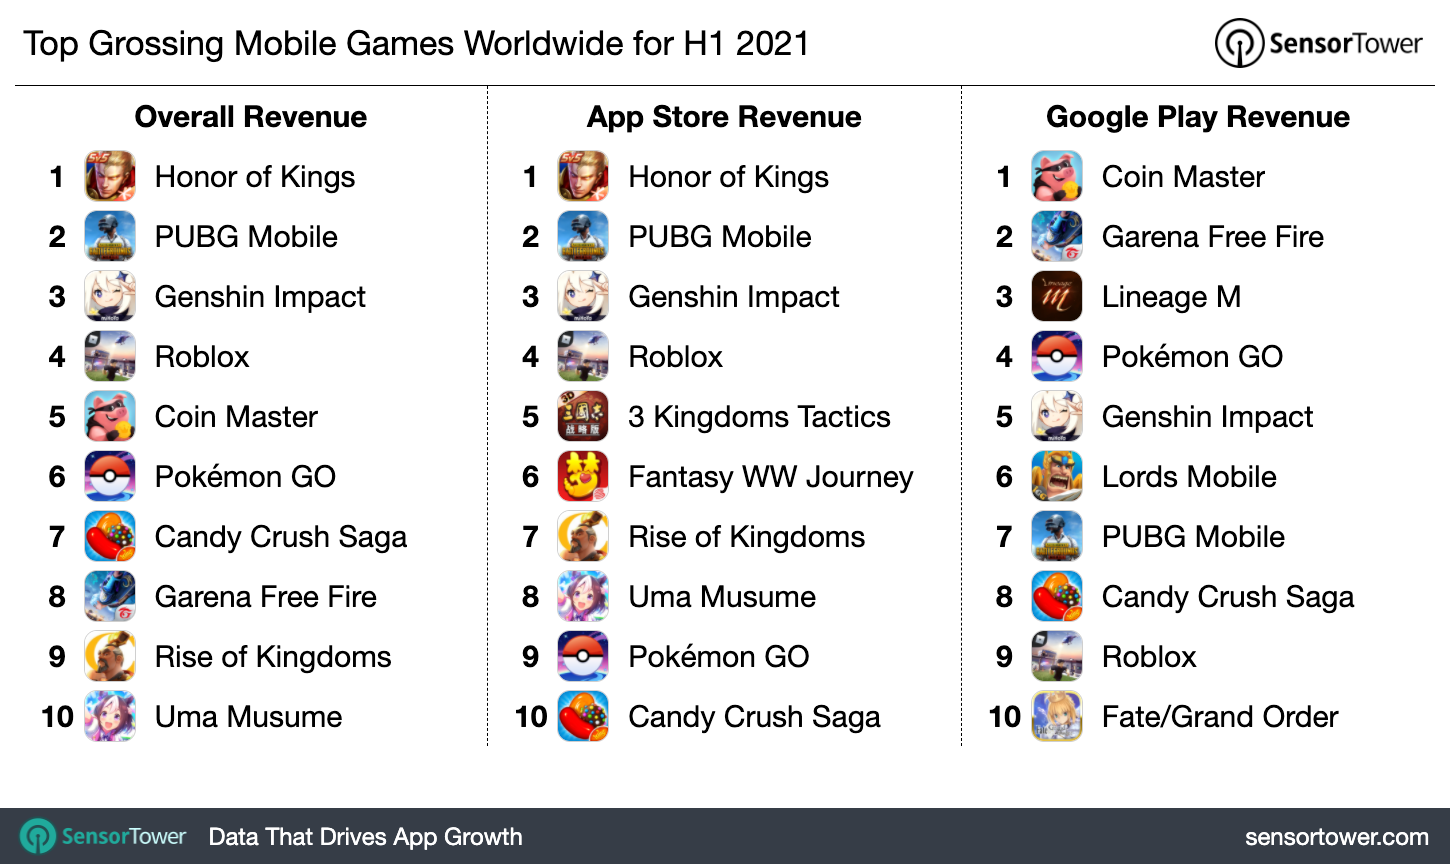 1H 2021 Top Grossing Games Worldwide